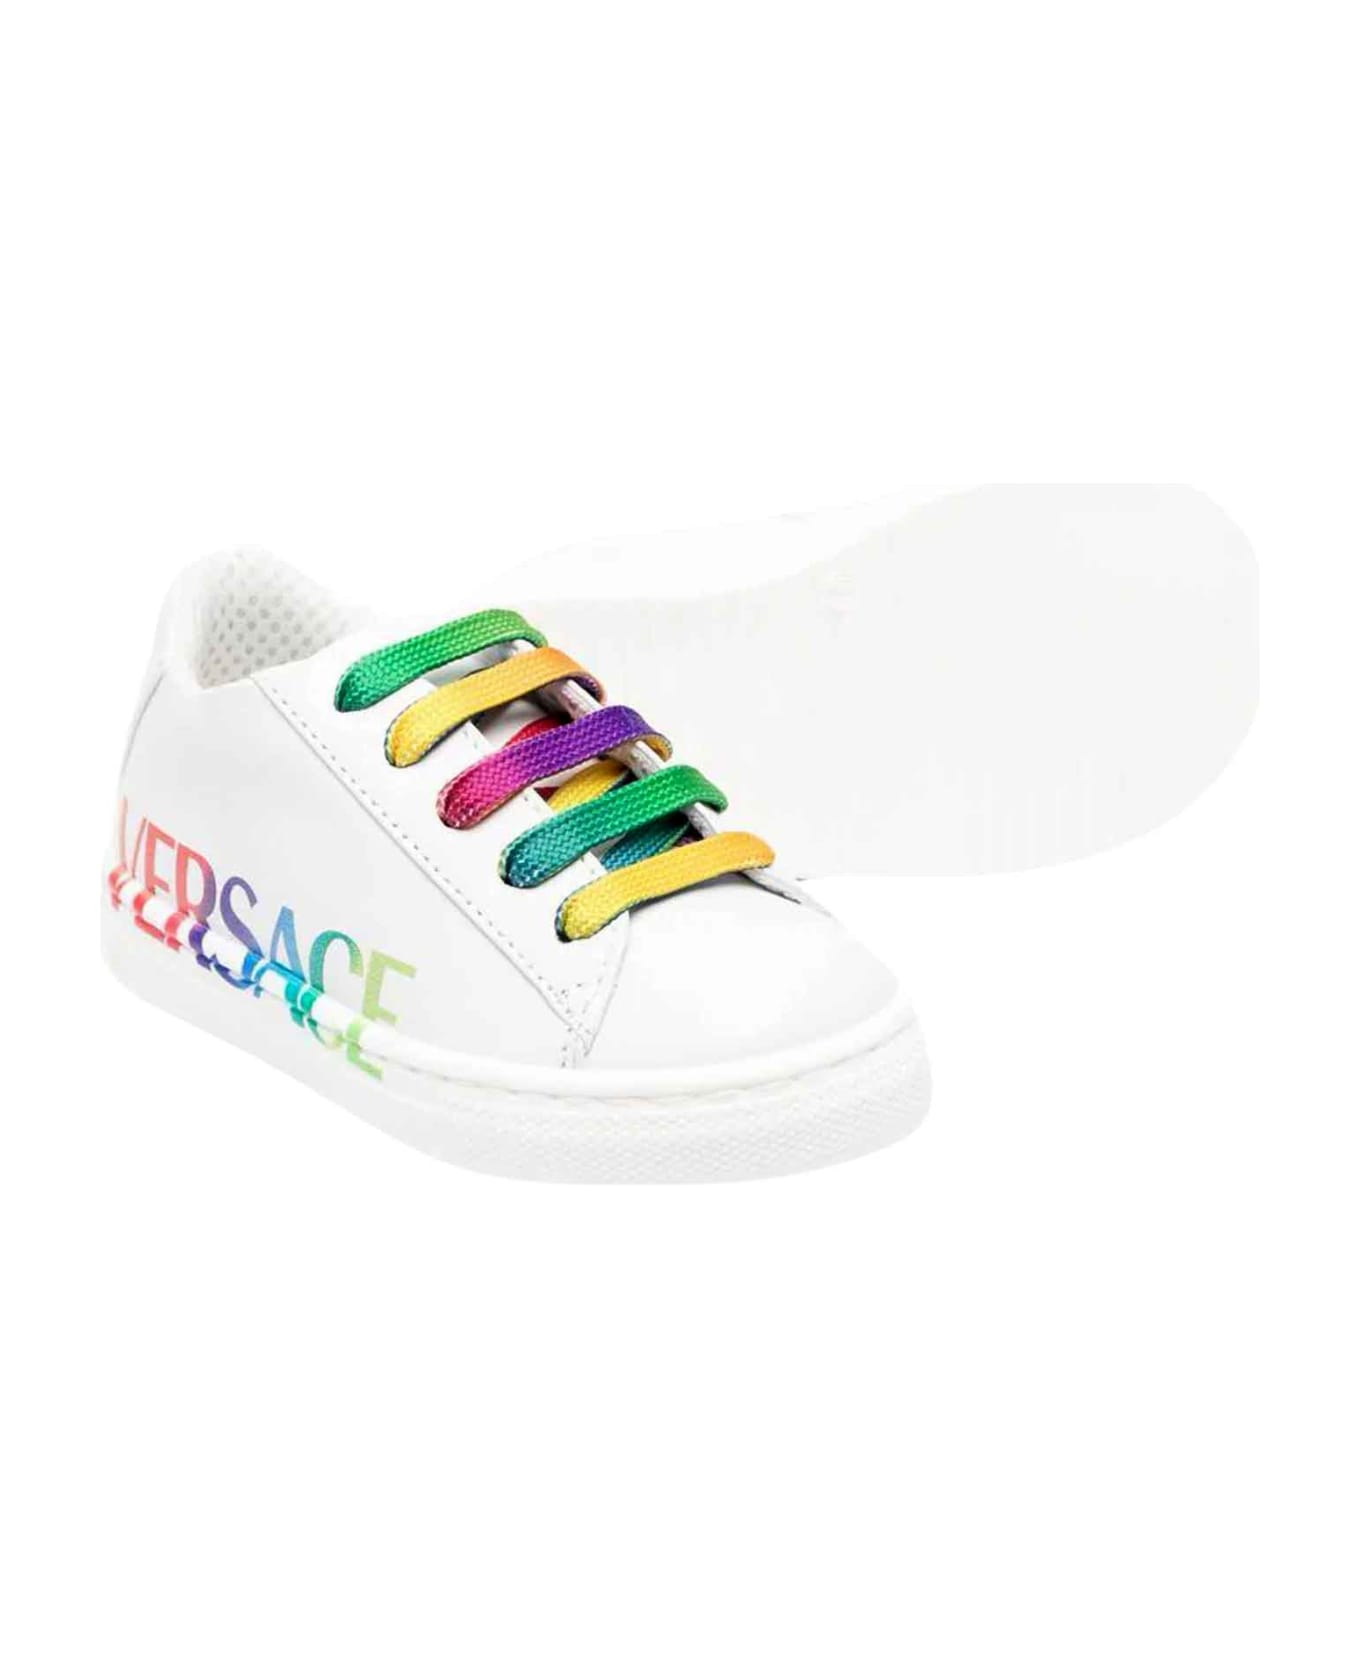 Versace White Sneakers Unisex Kids - Bianco